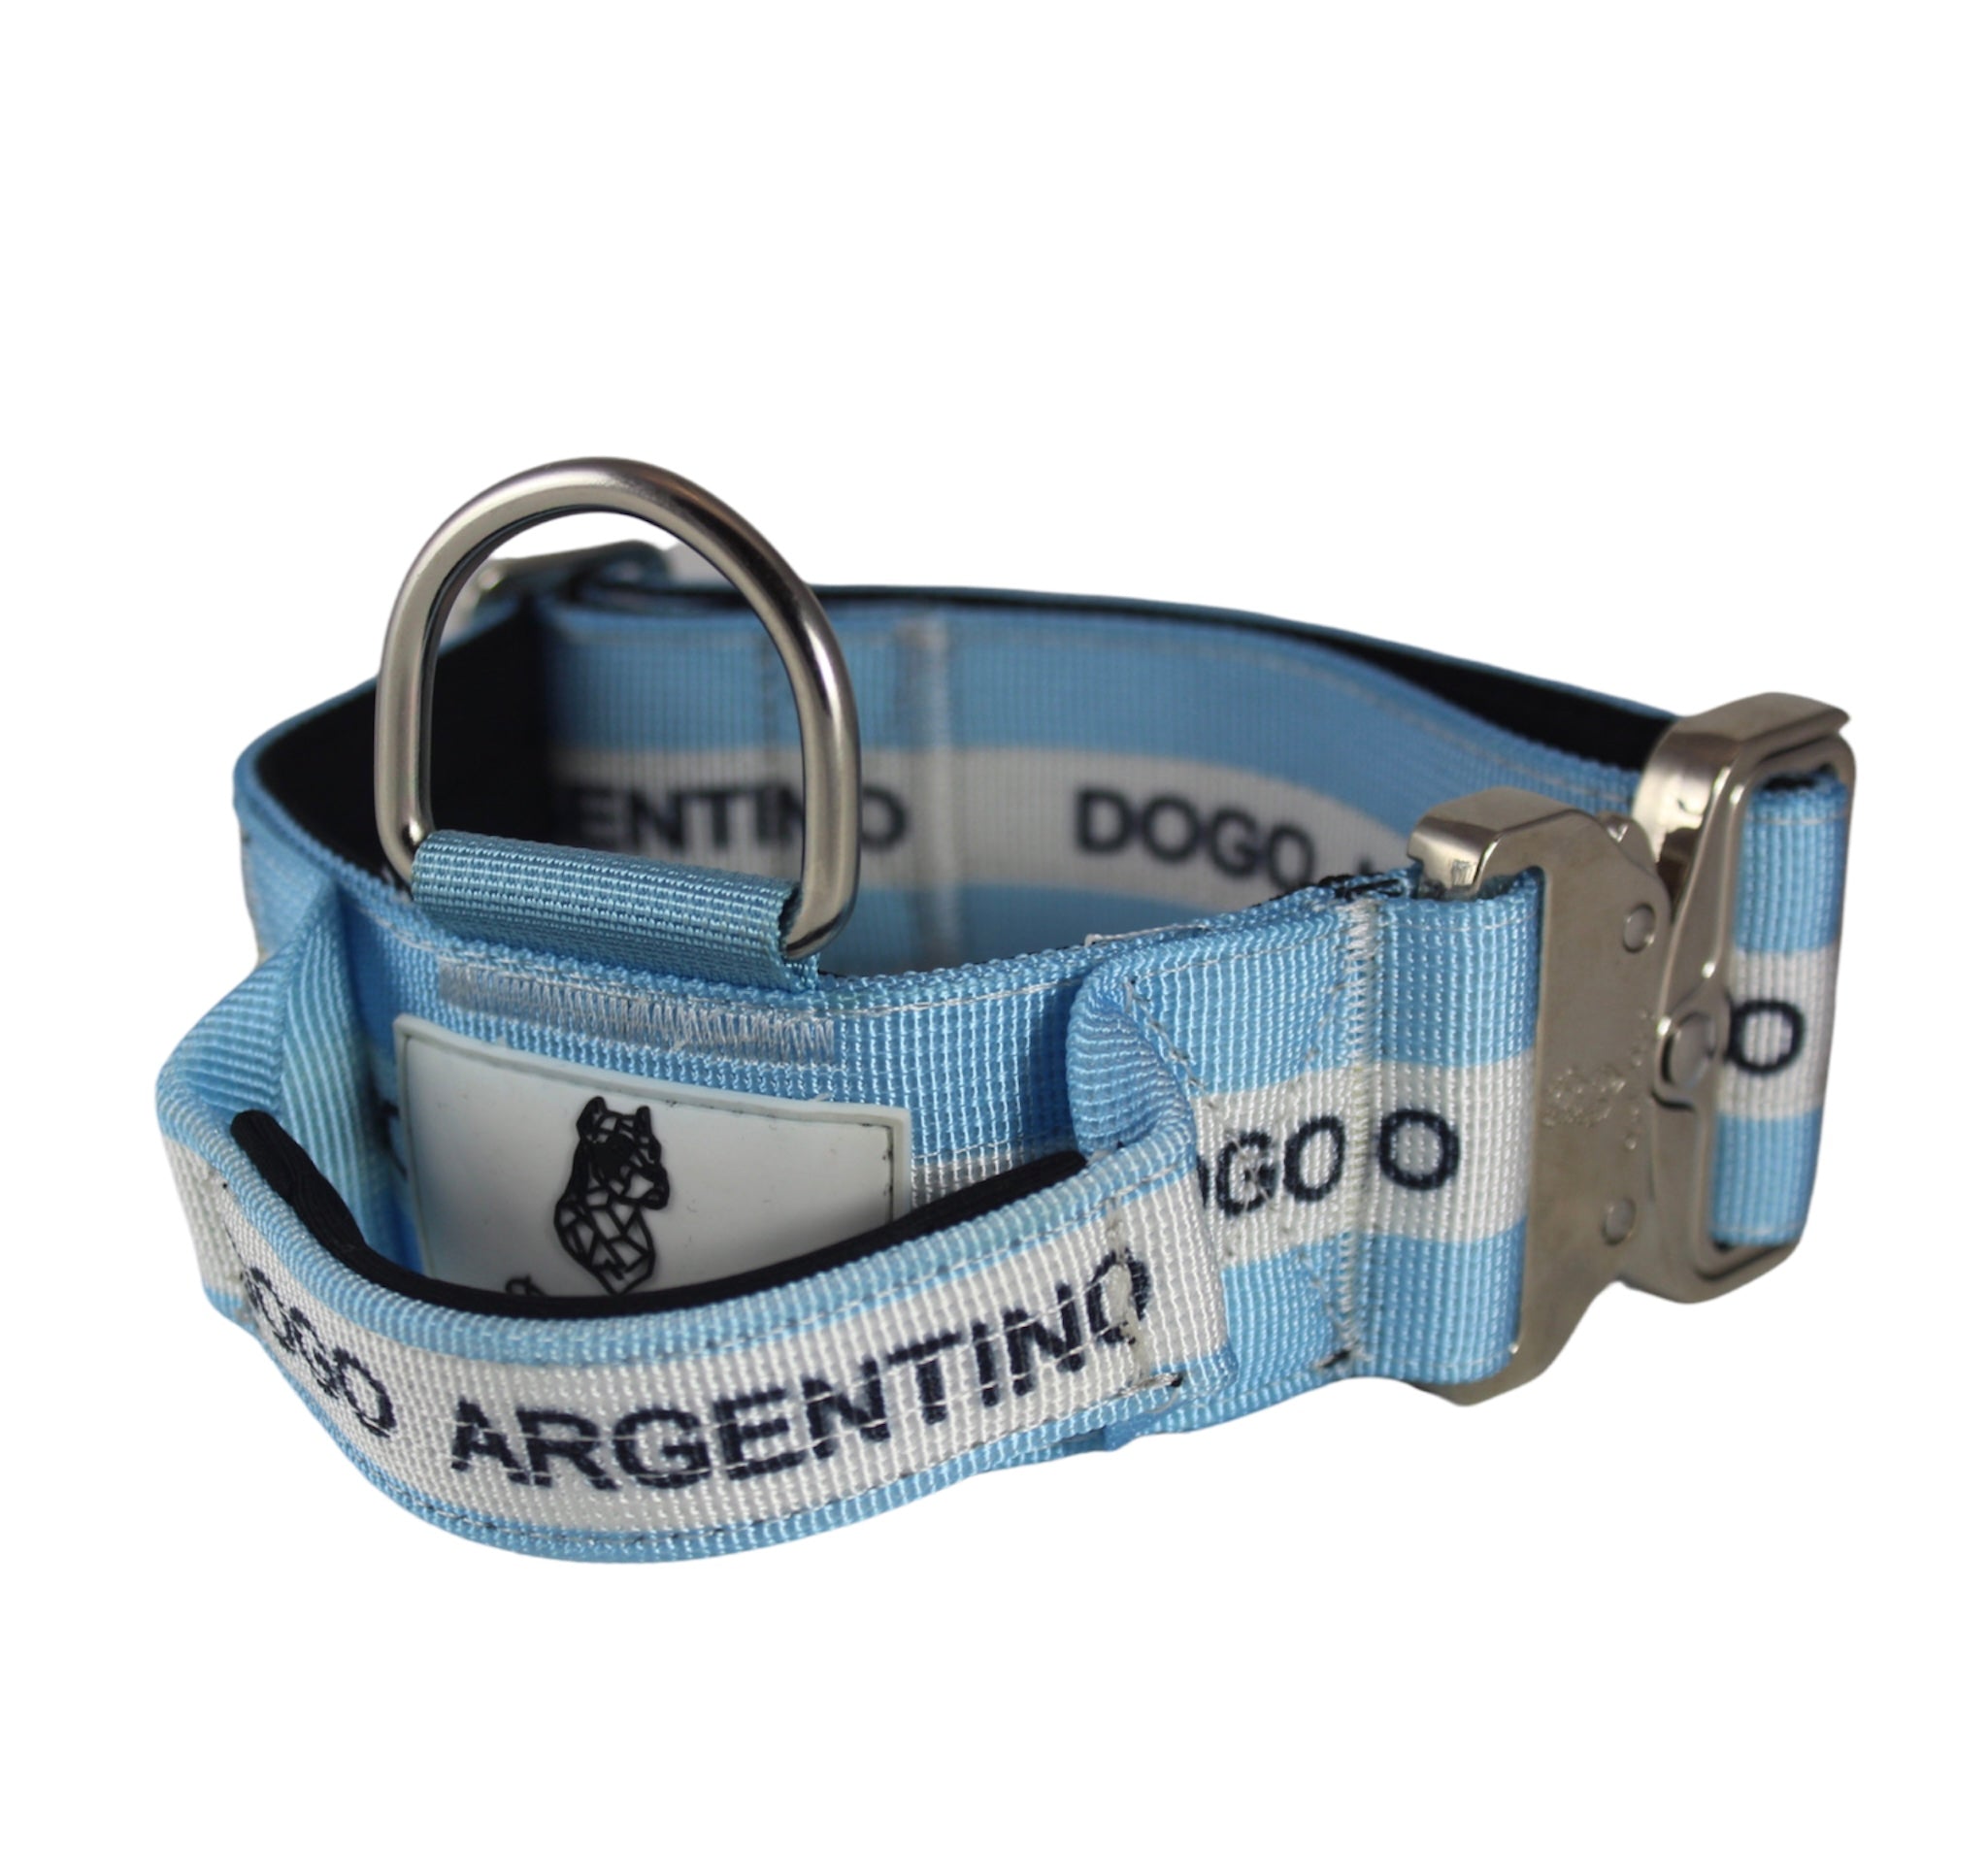 Defence Dog Collar - Chrome - Dogo Argentino